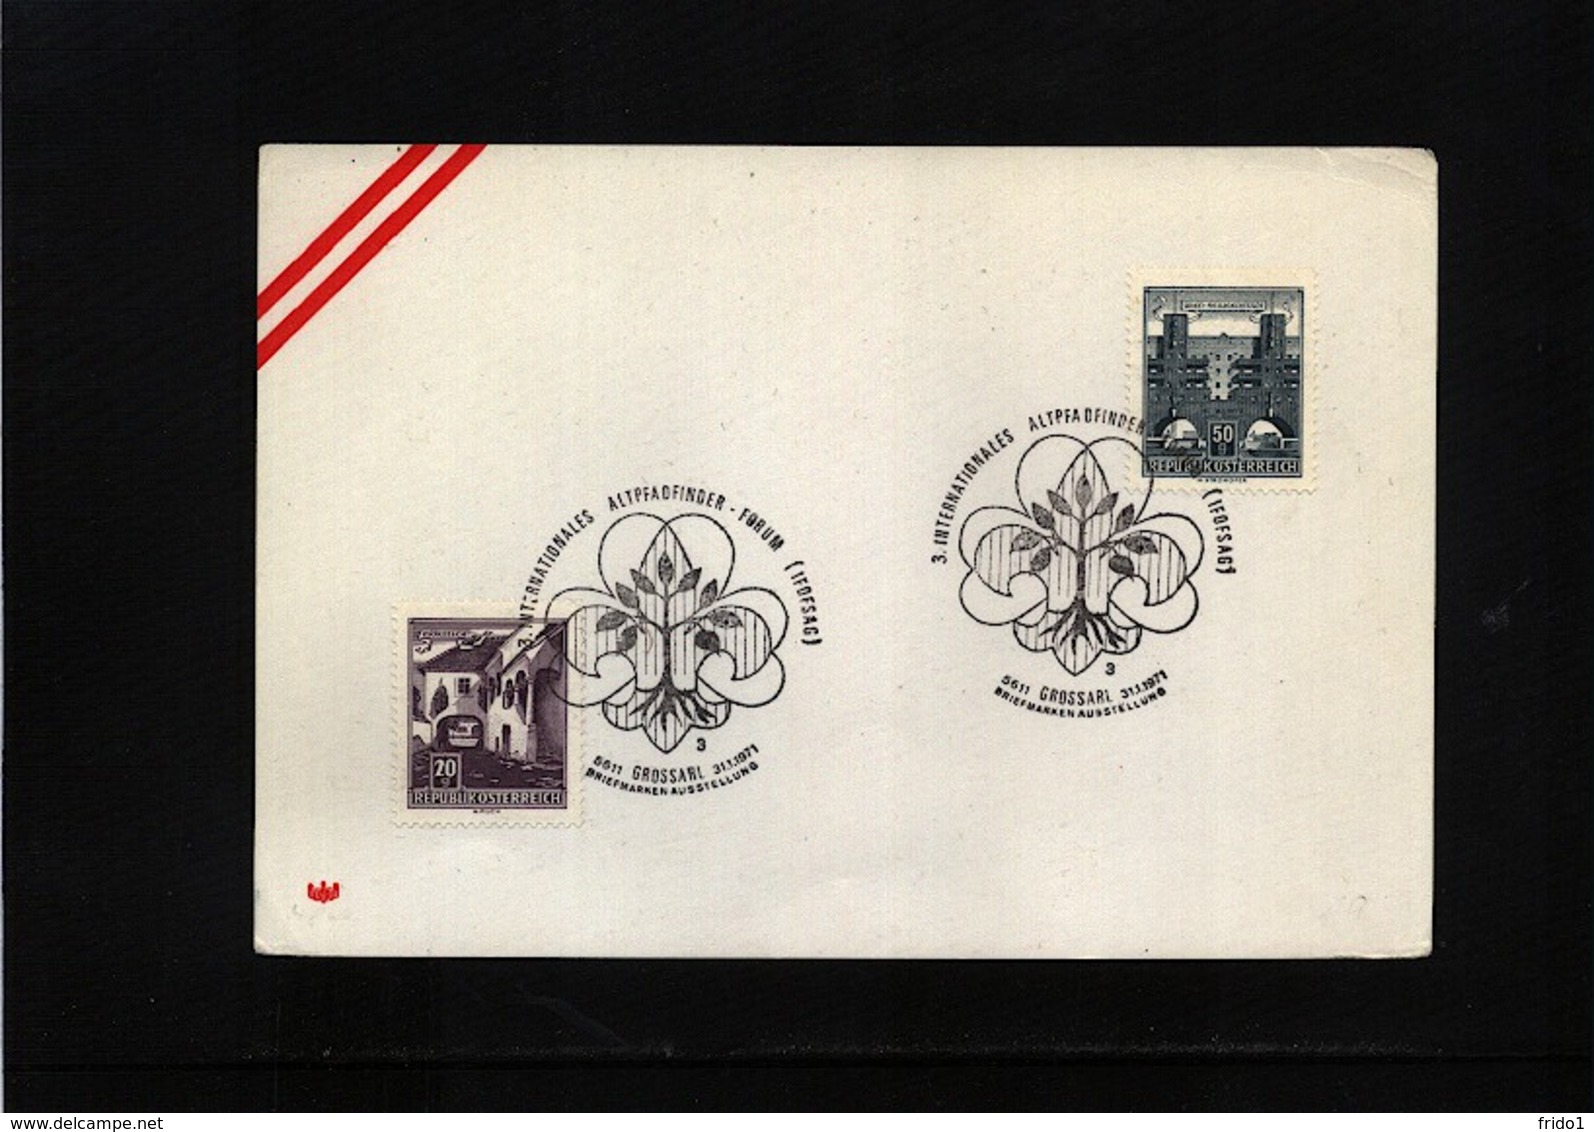 Austria / Oesterreich 1971 Scouting / Pfadfinder Interesting Cover - Lettres & Documents